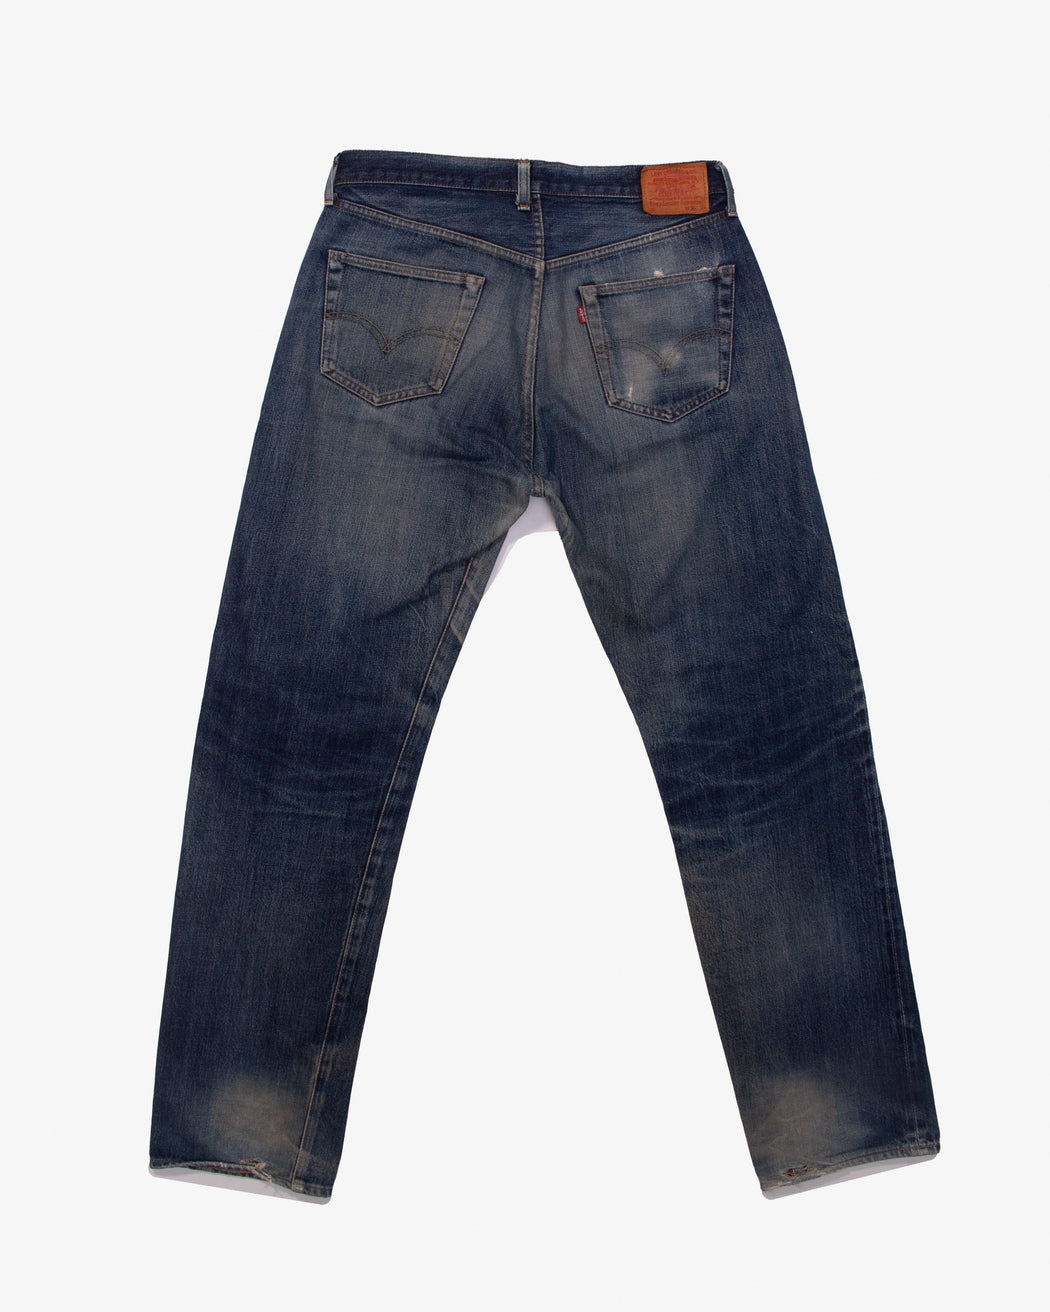 Japanese Repro Denim Jeans, Levi's Brand, Selvedge Denim - 36